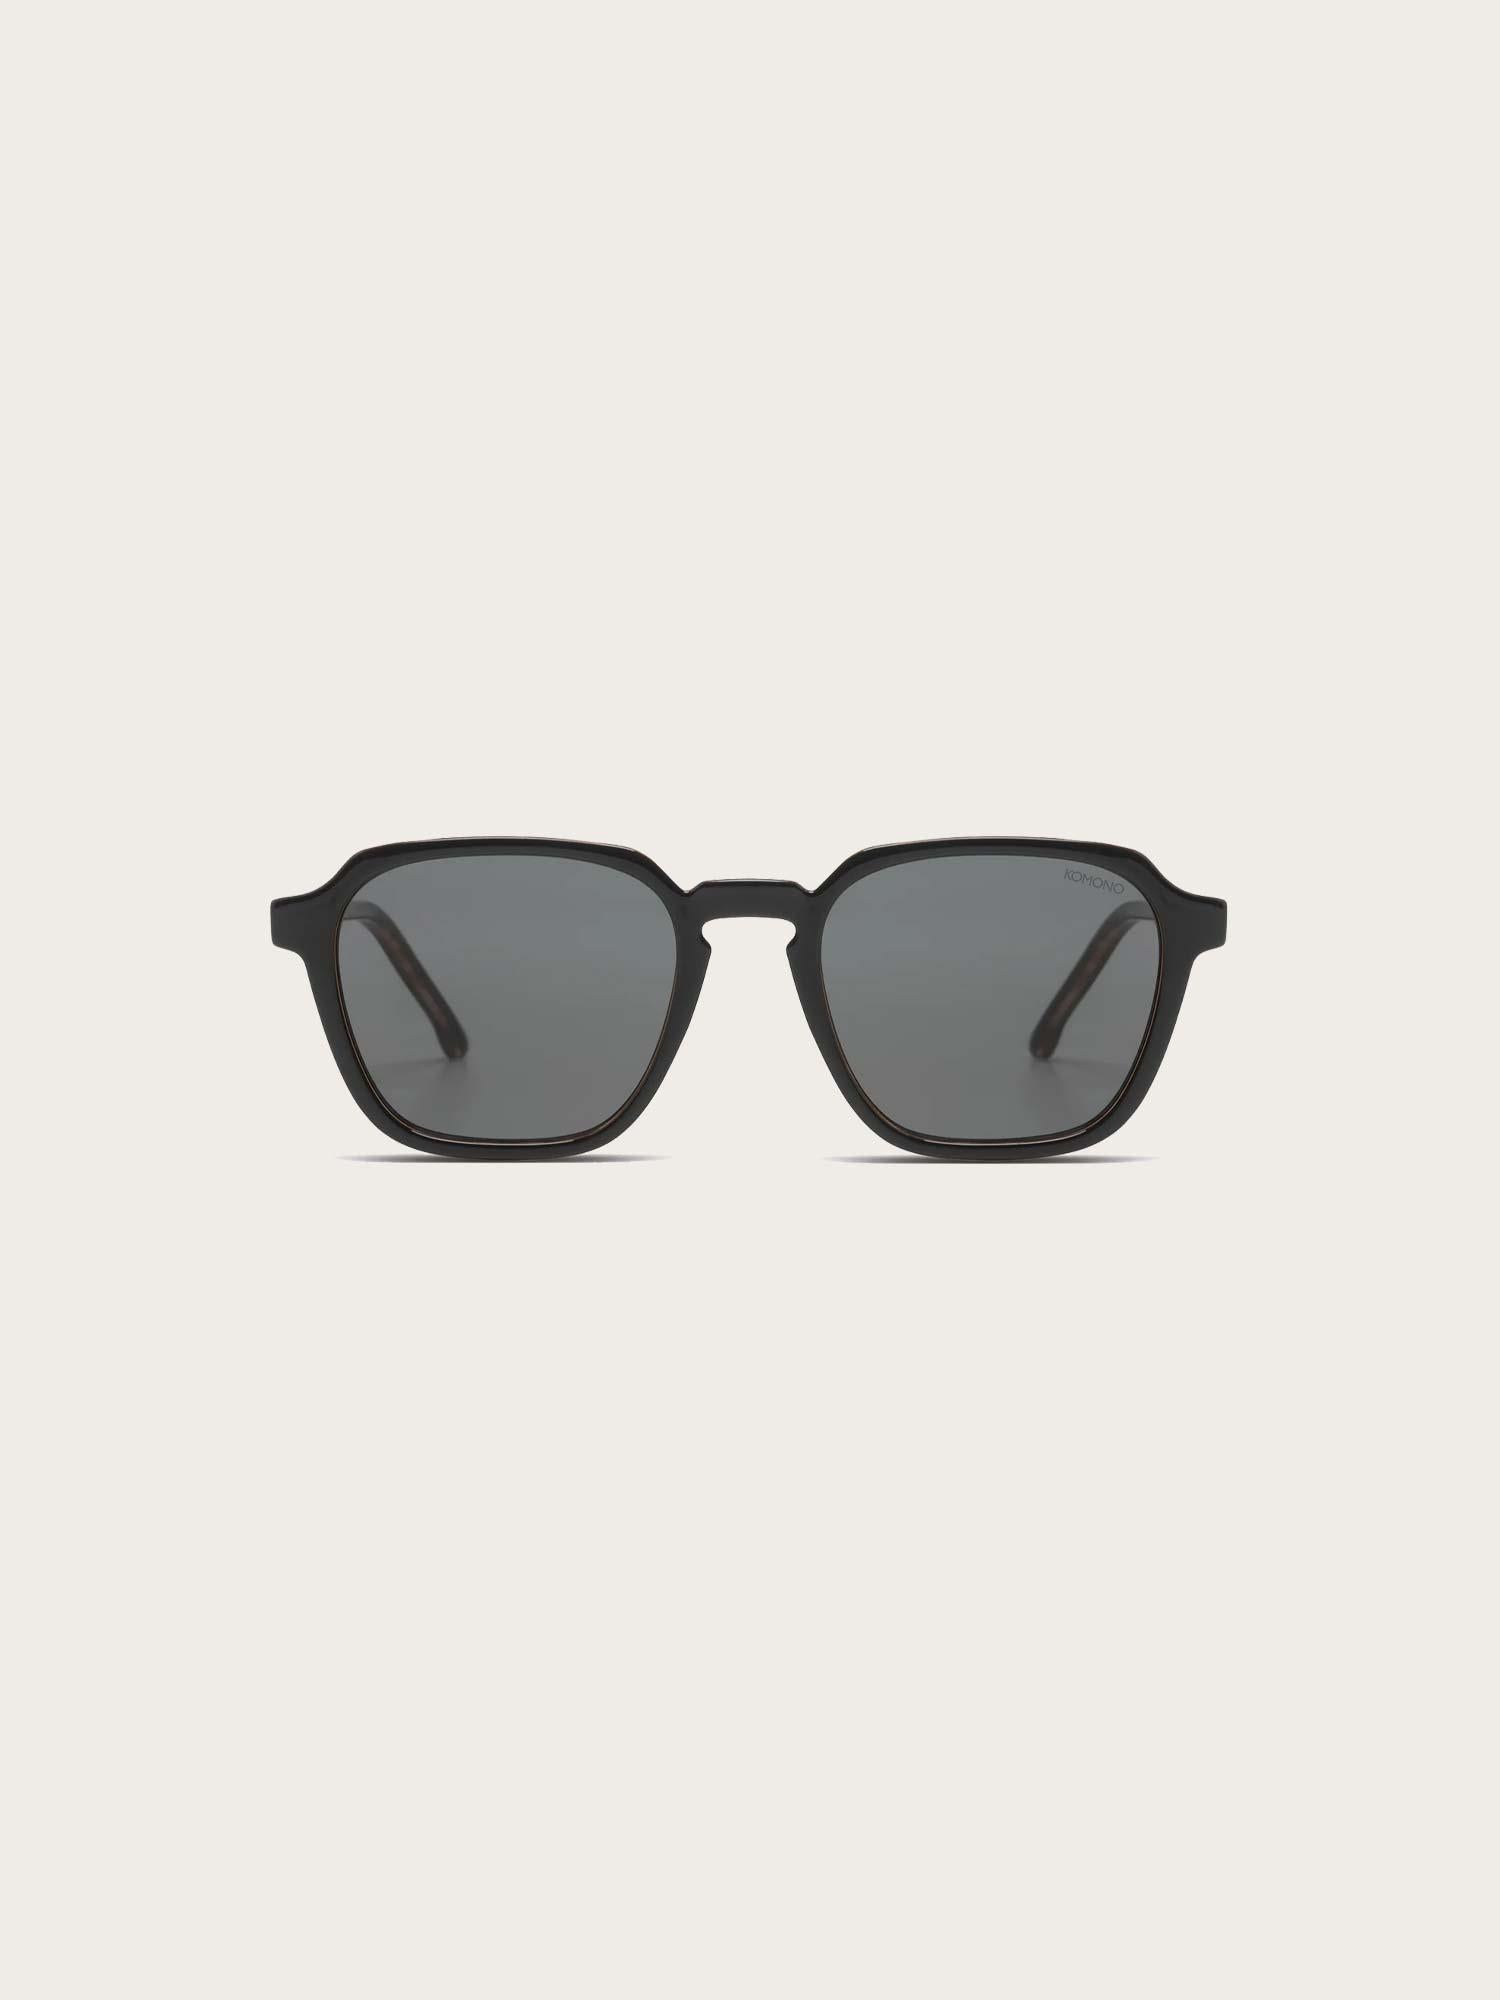 Matty Sunglasses - Black Tortoise